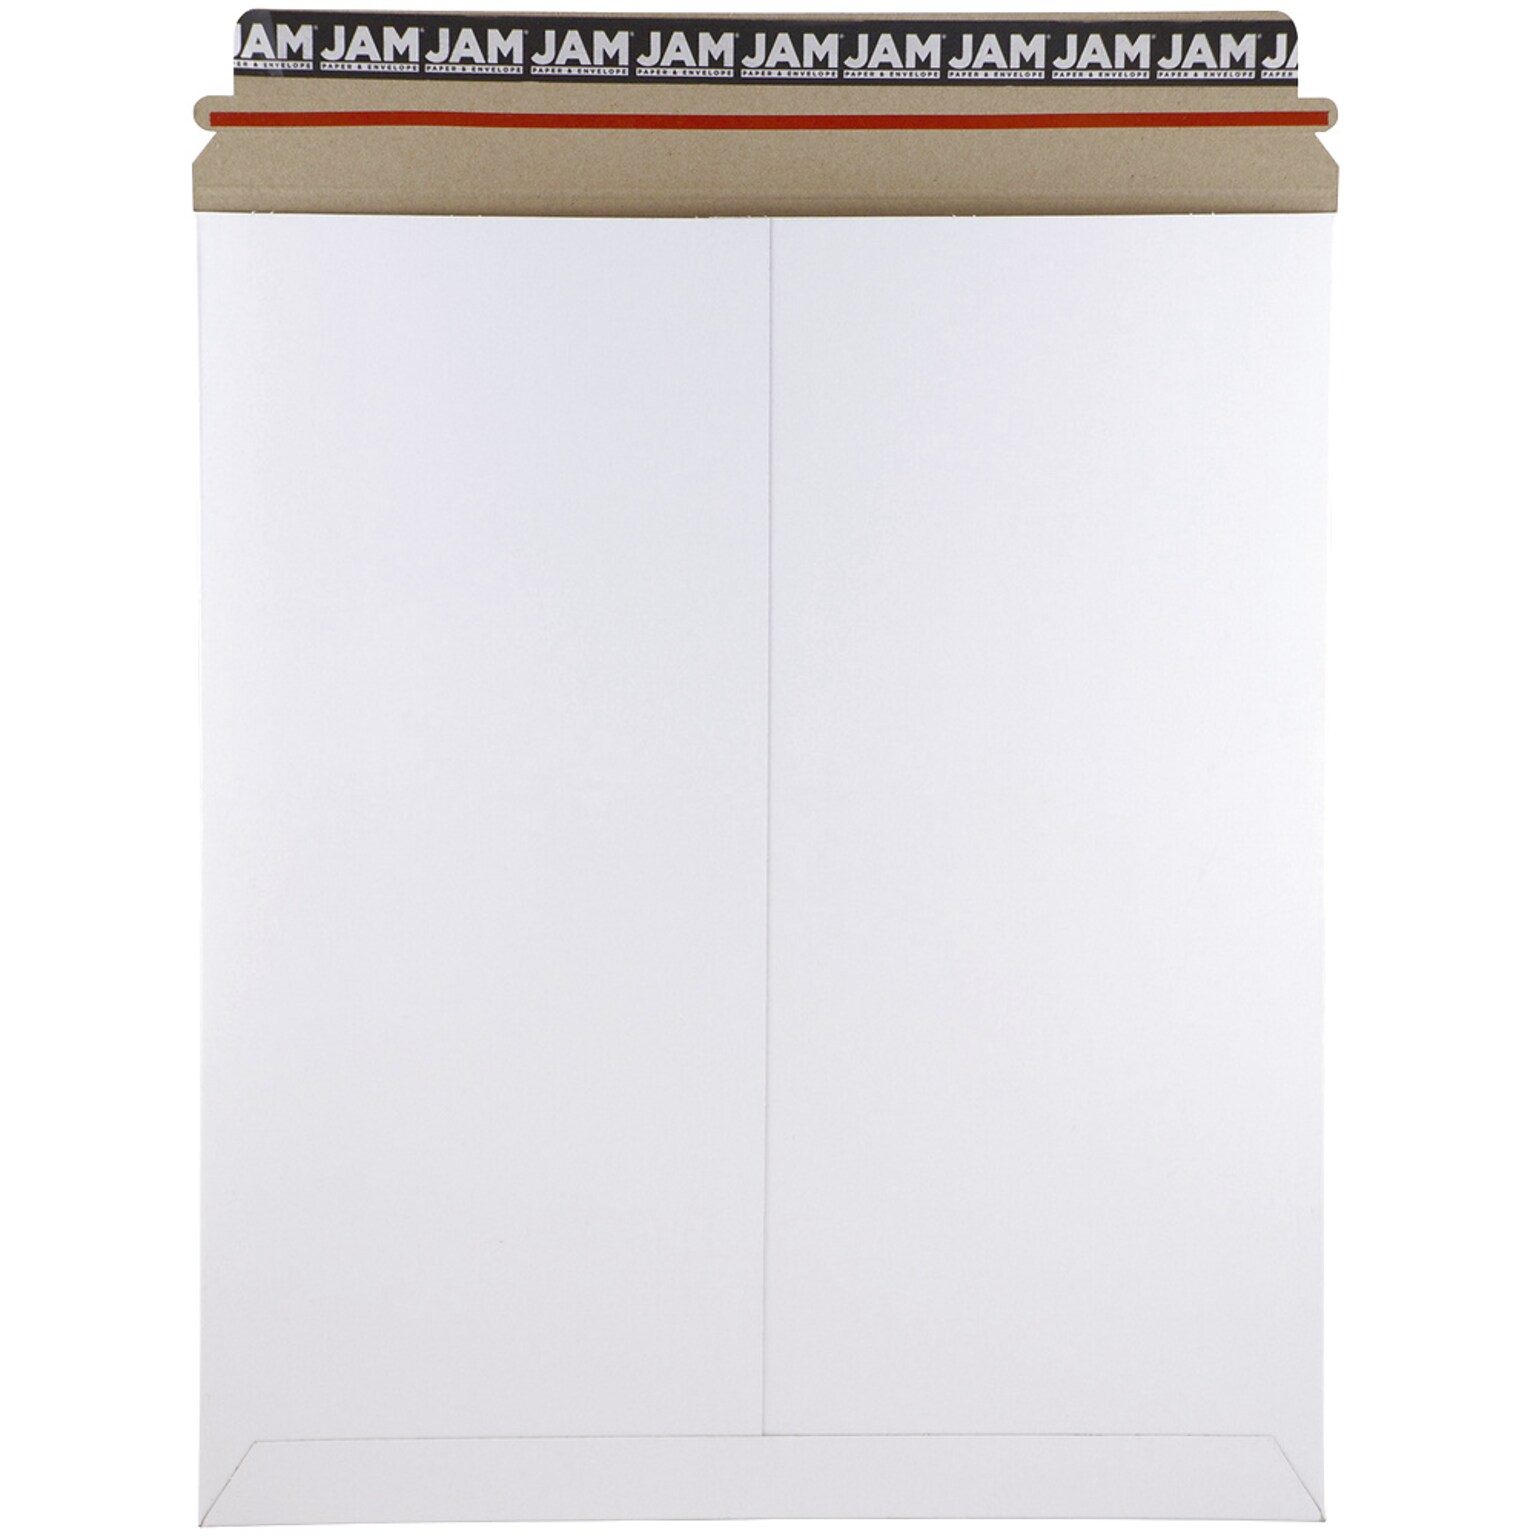 Jam Paper Stay-Flat Photo Mailer, 12.75 x 15, White, 6/Pack (4PSWB)